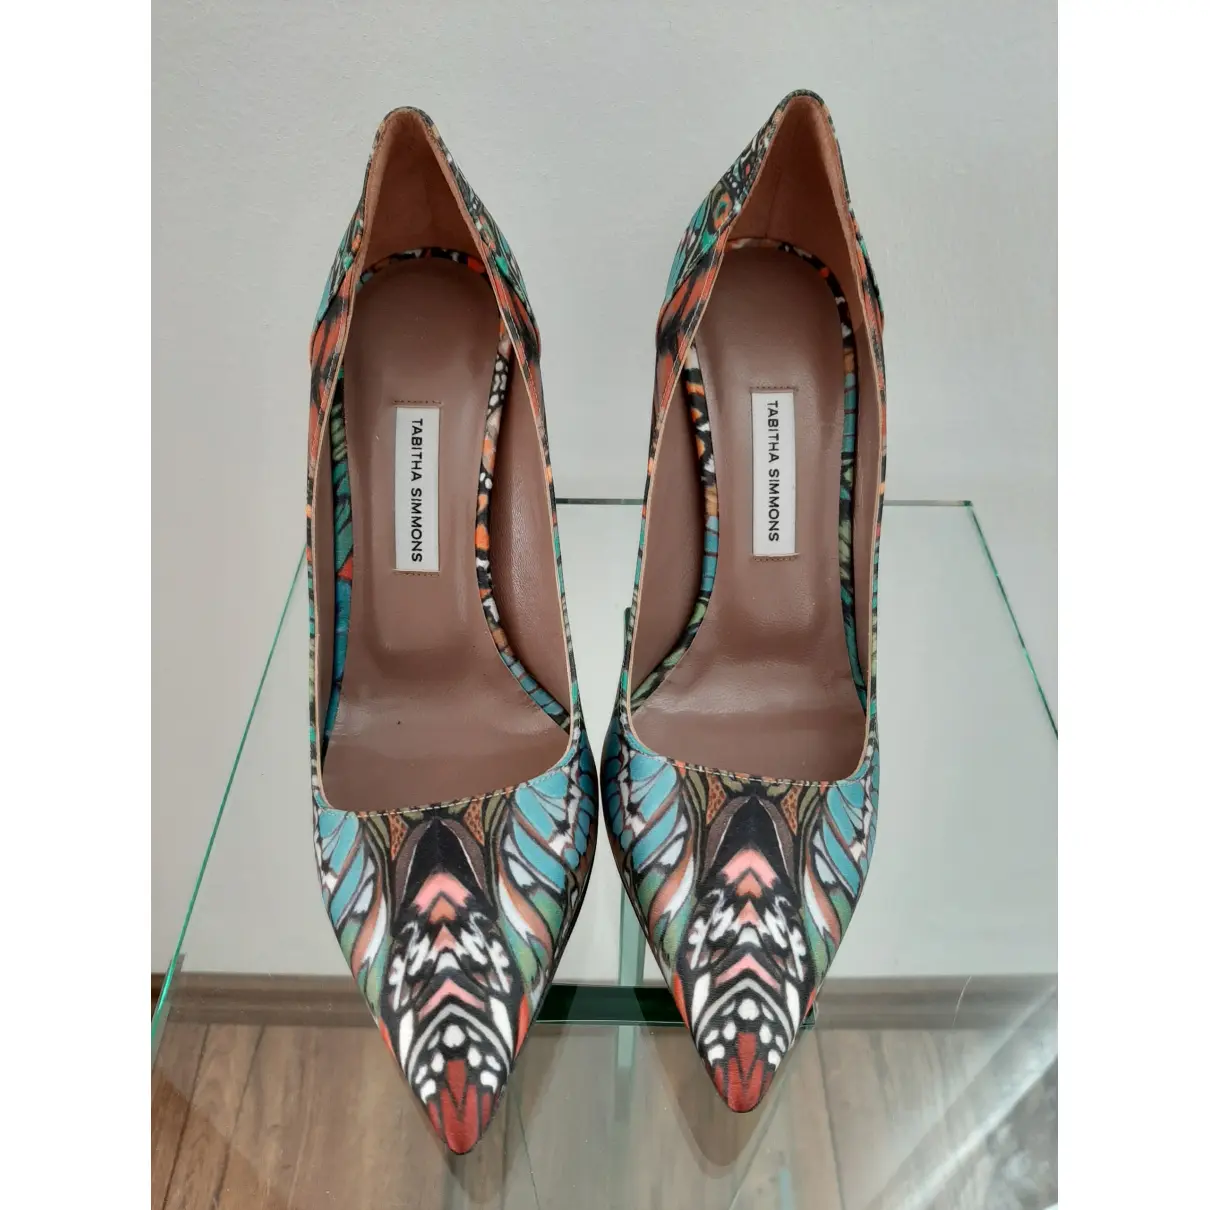 Buy Tabitha Simmons Leather heels online